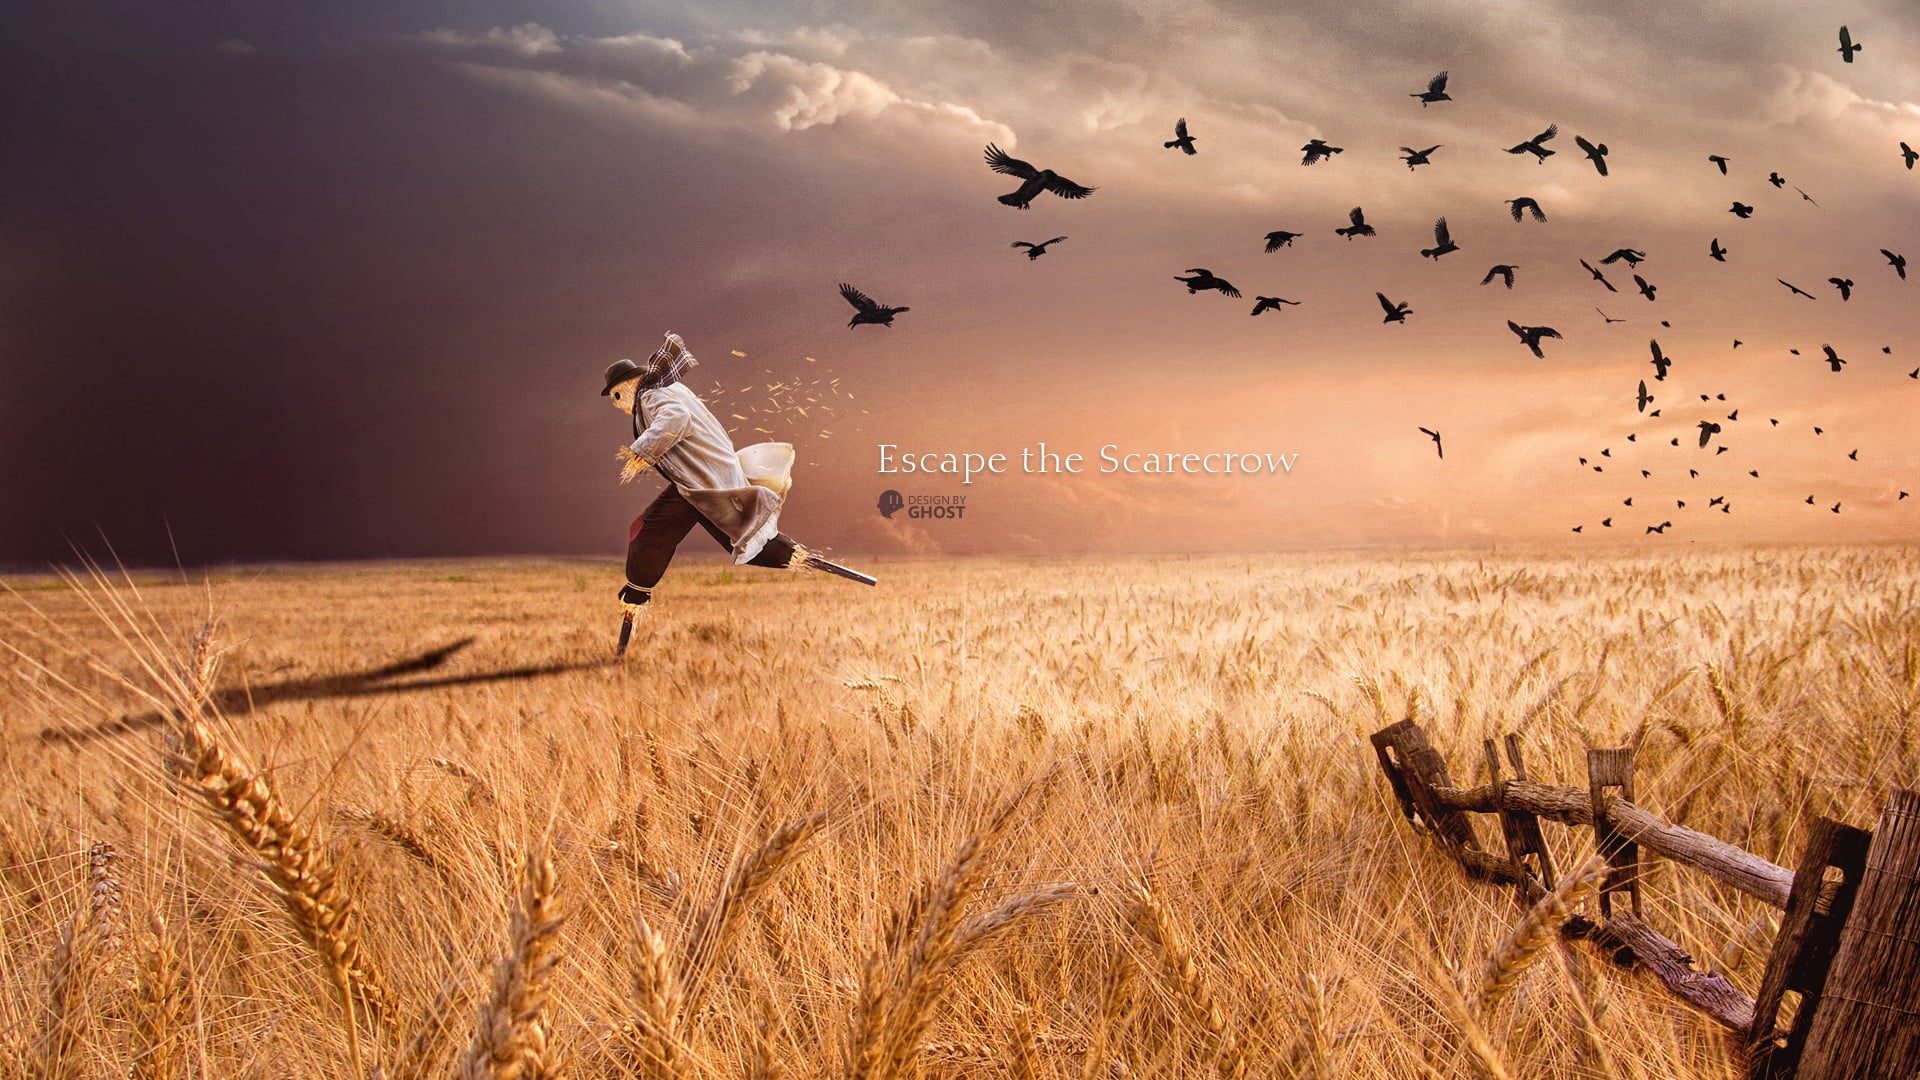 grain field, scarecrows, sky, wheat, crow